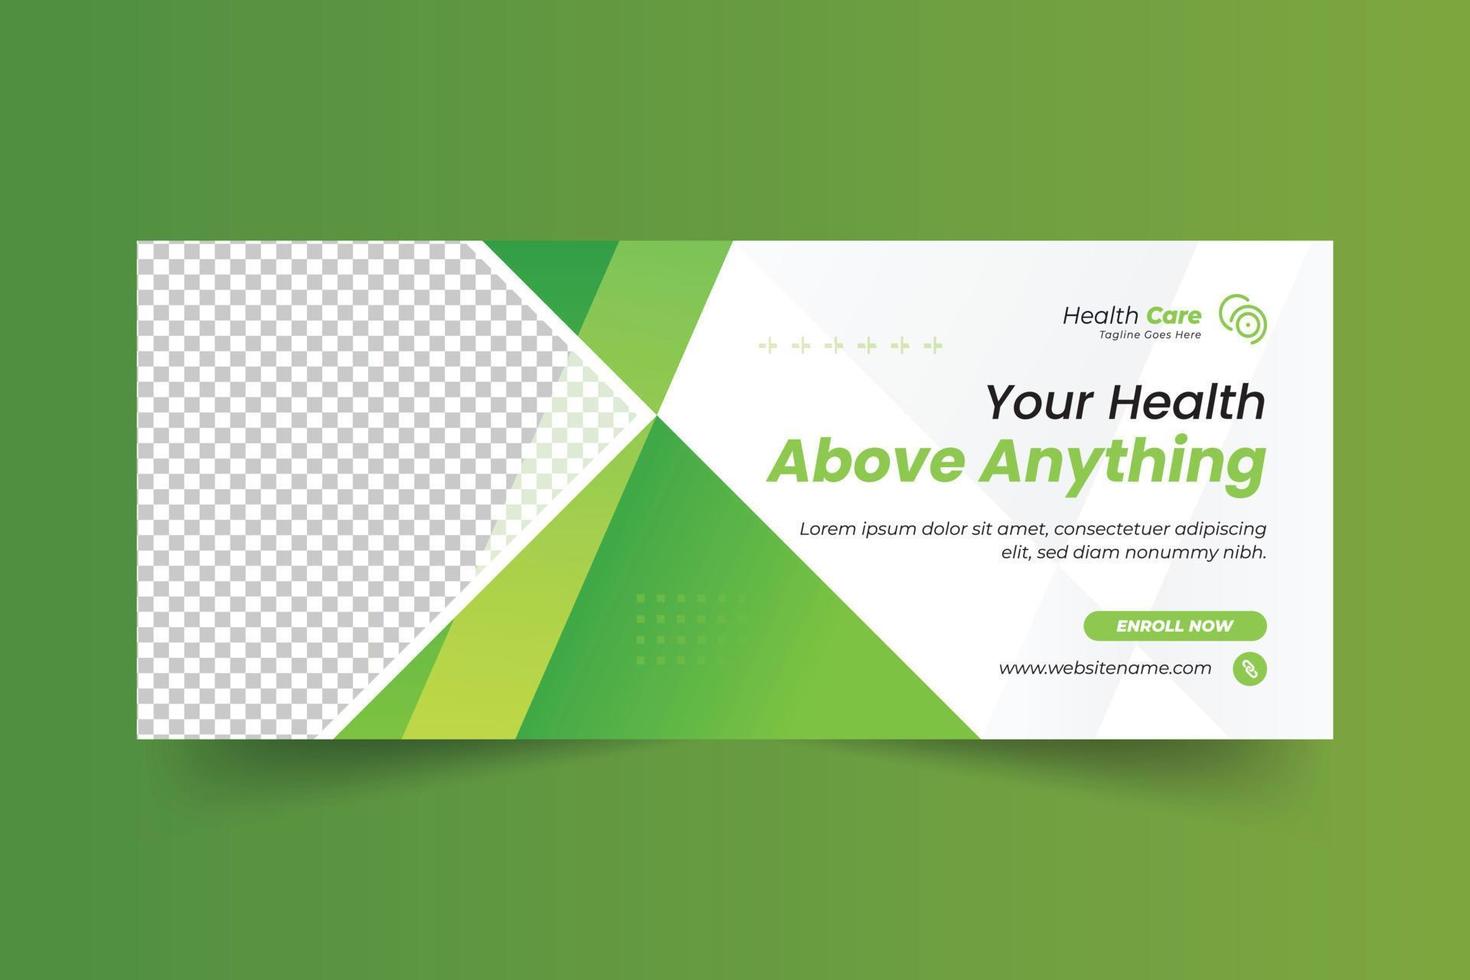 Medical healthcare web banner design and social media cover vector